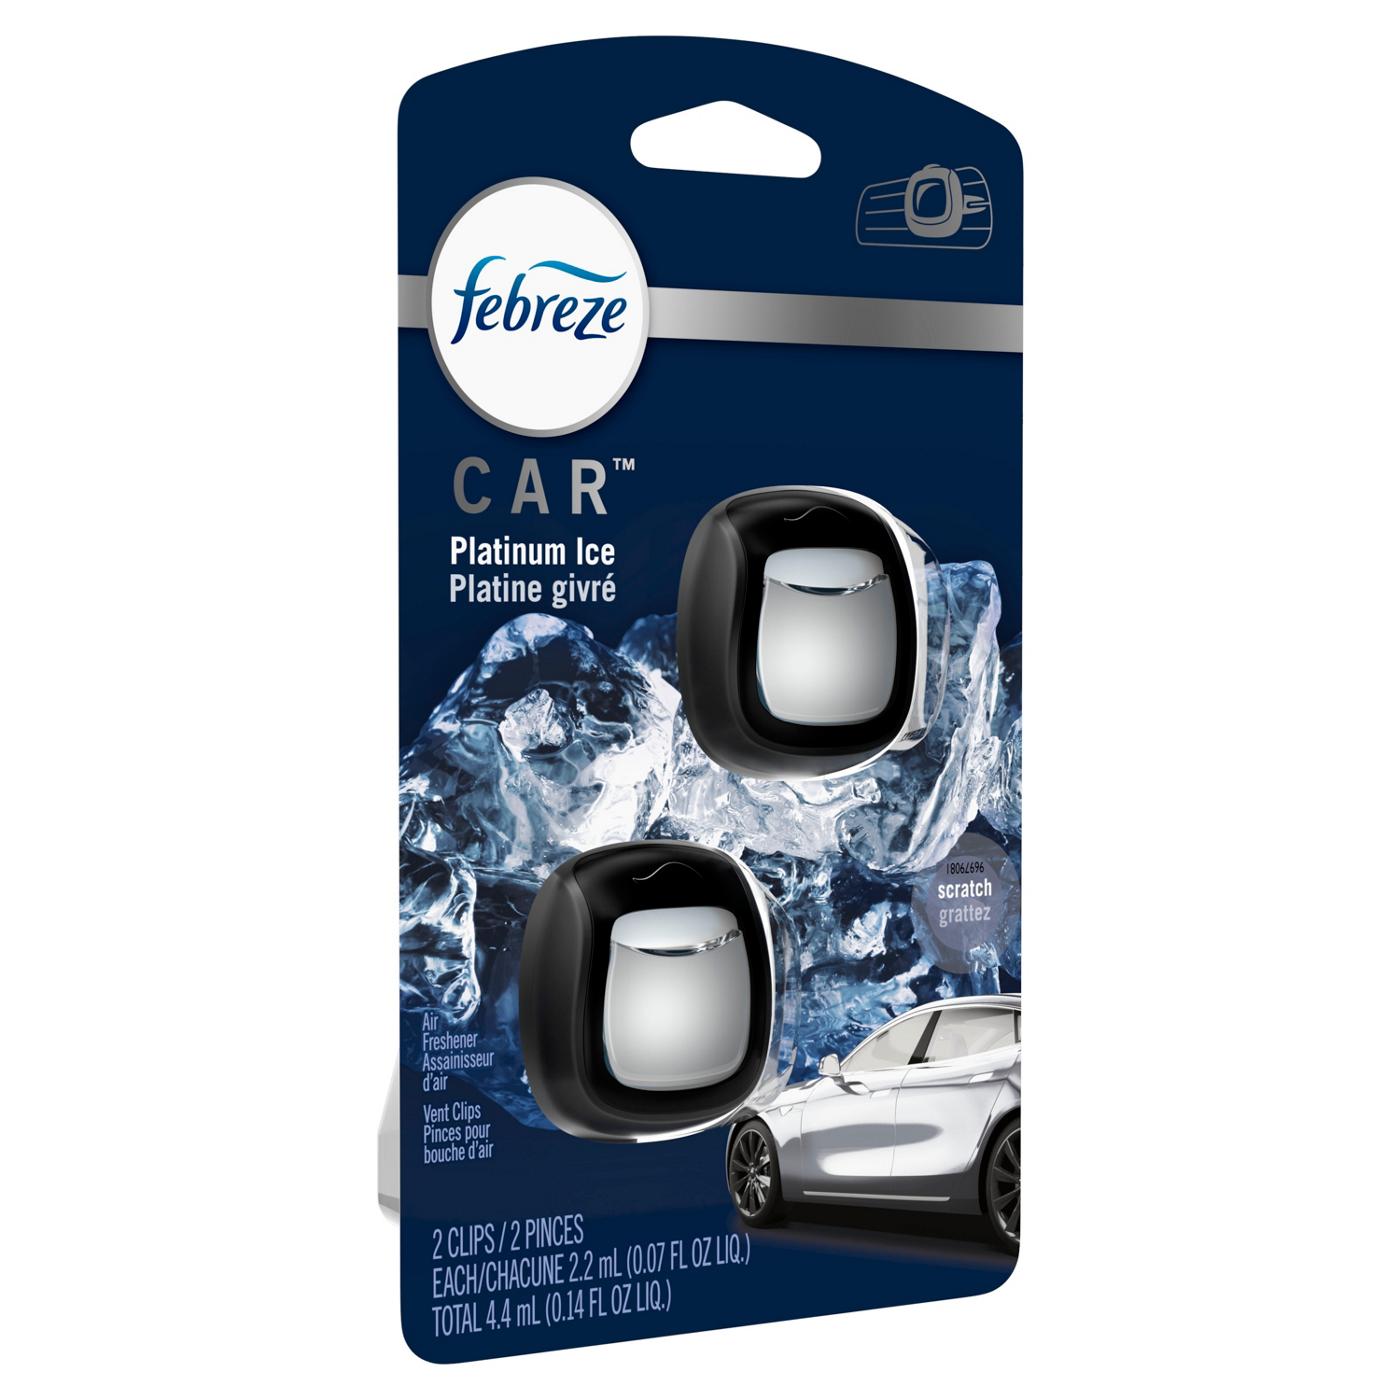 Febreze Car Vent Clips Air Freshener Review